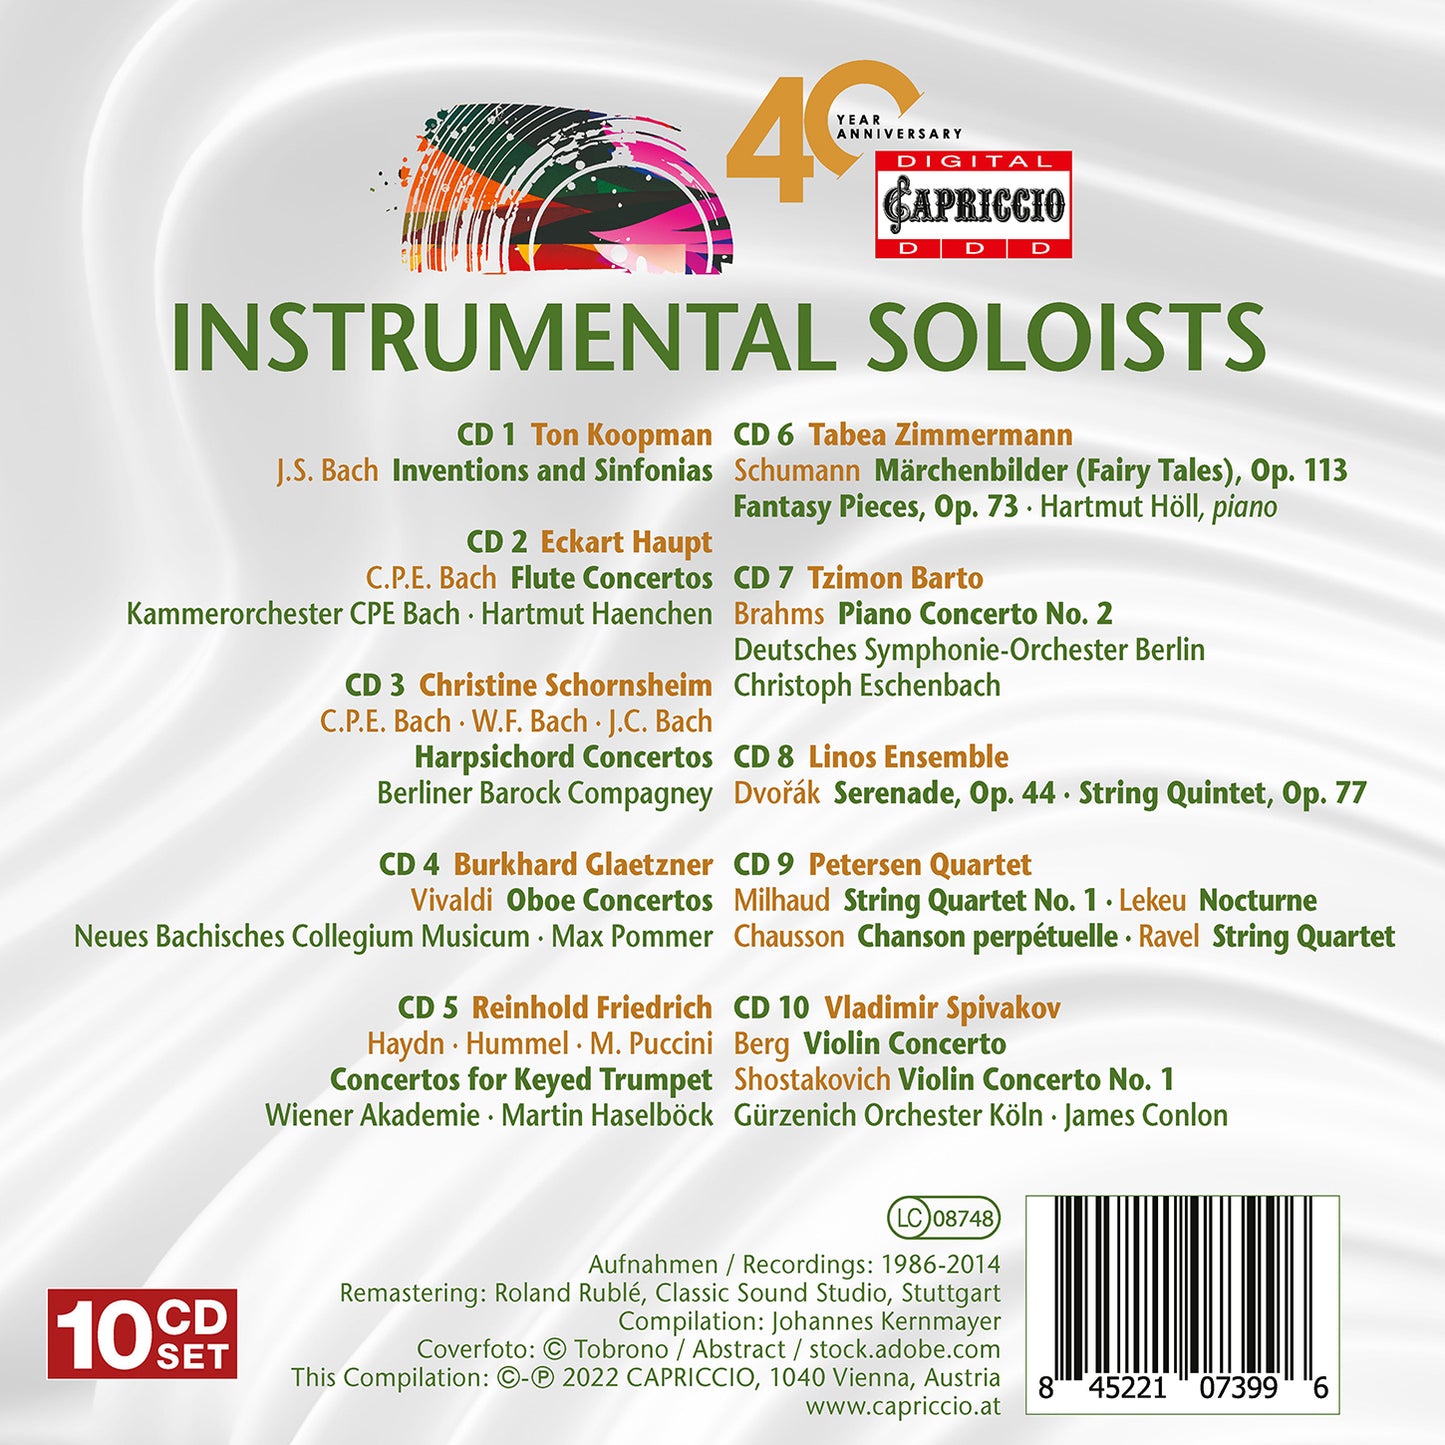 Capriccio 40 Year Anniversary - Instrumental Soloists Box Set [10 CDs]